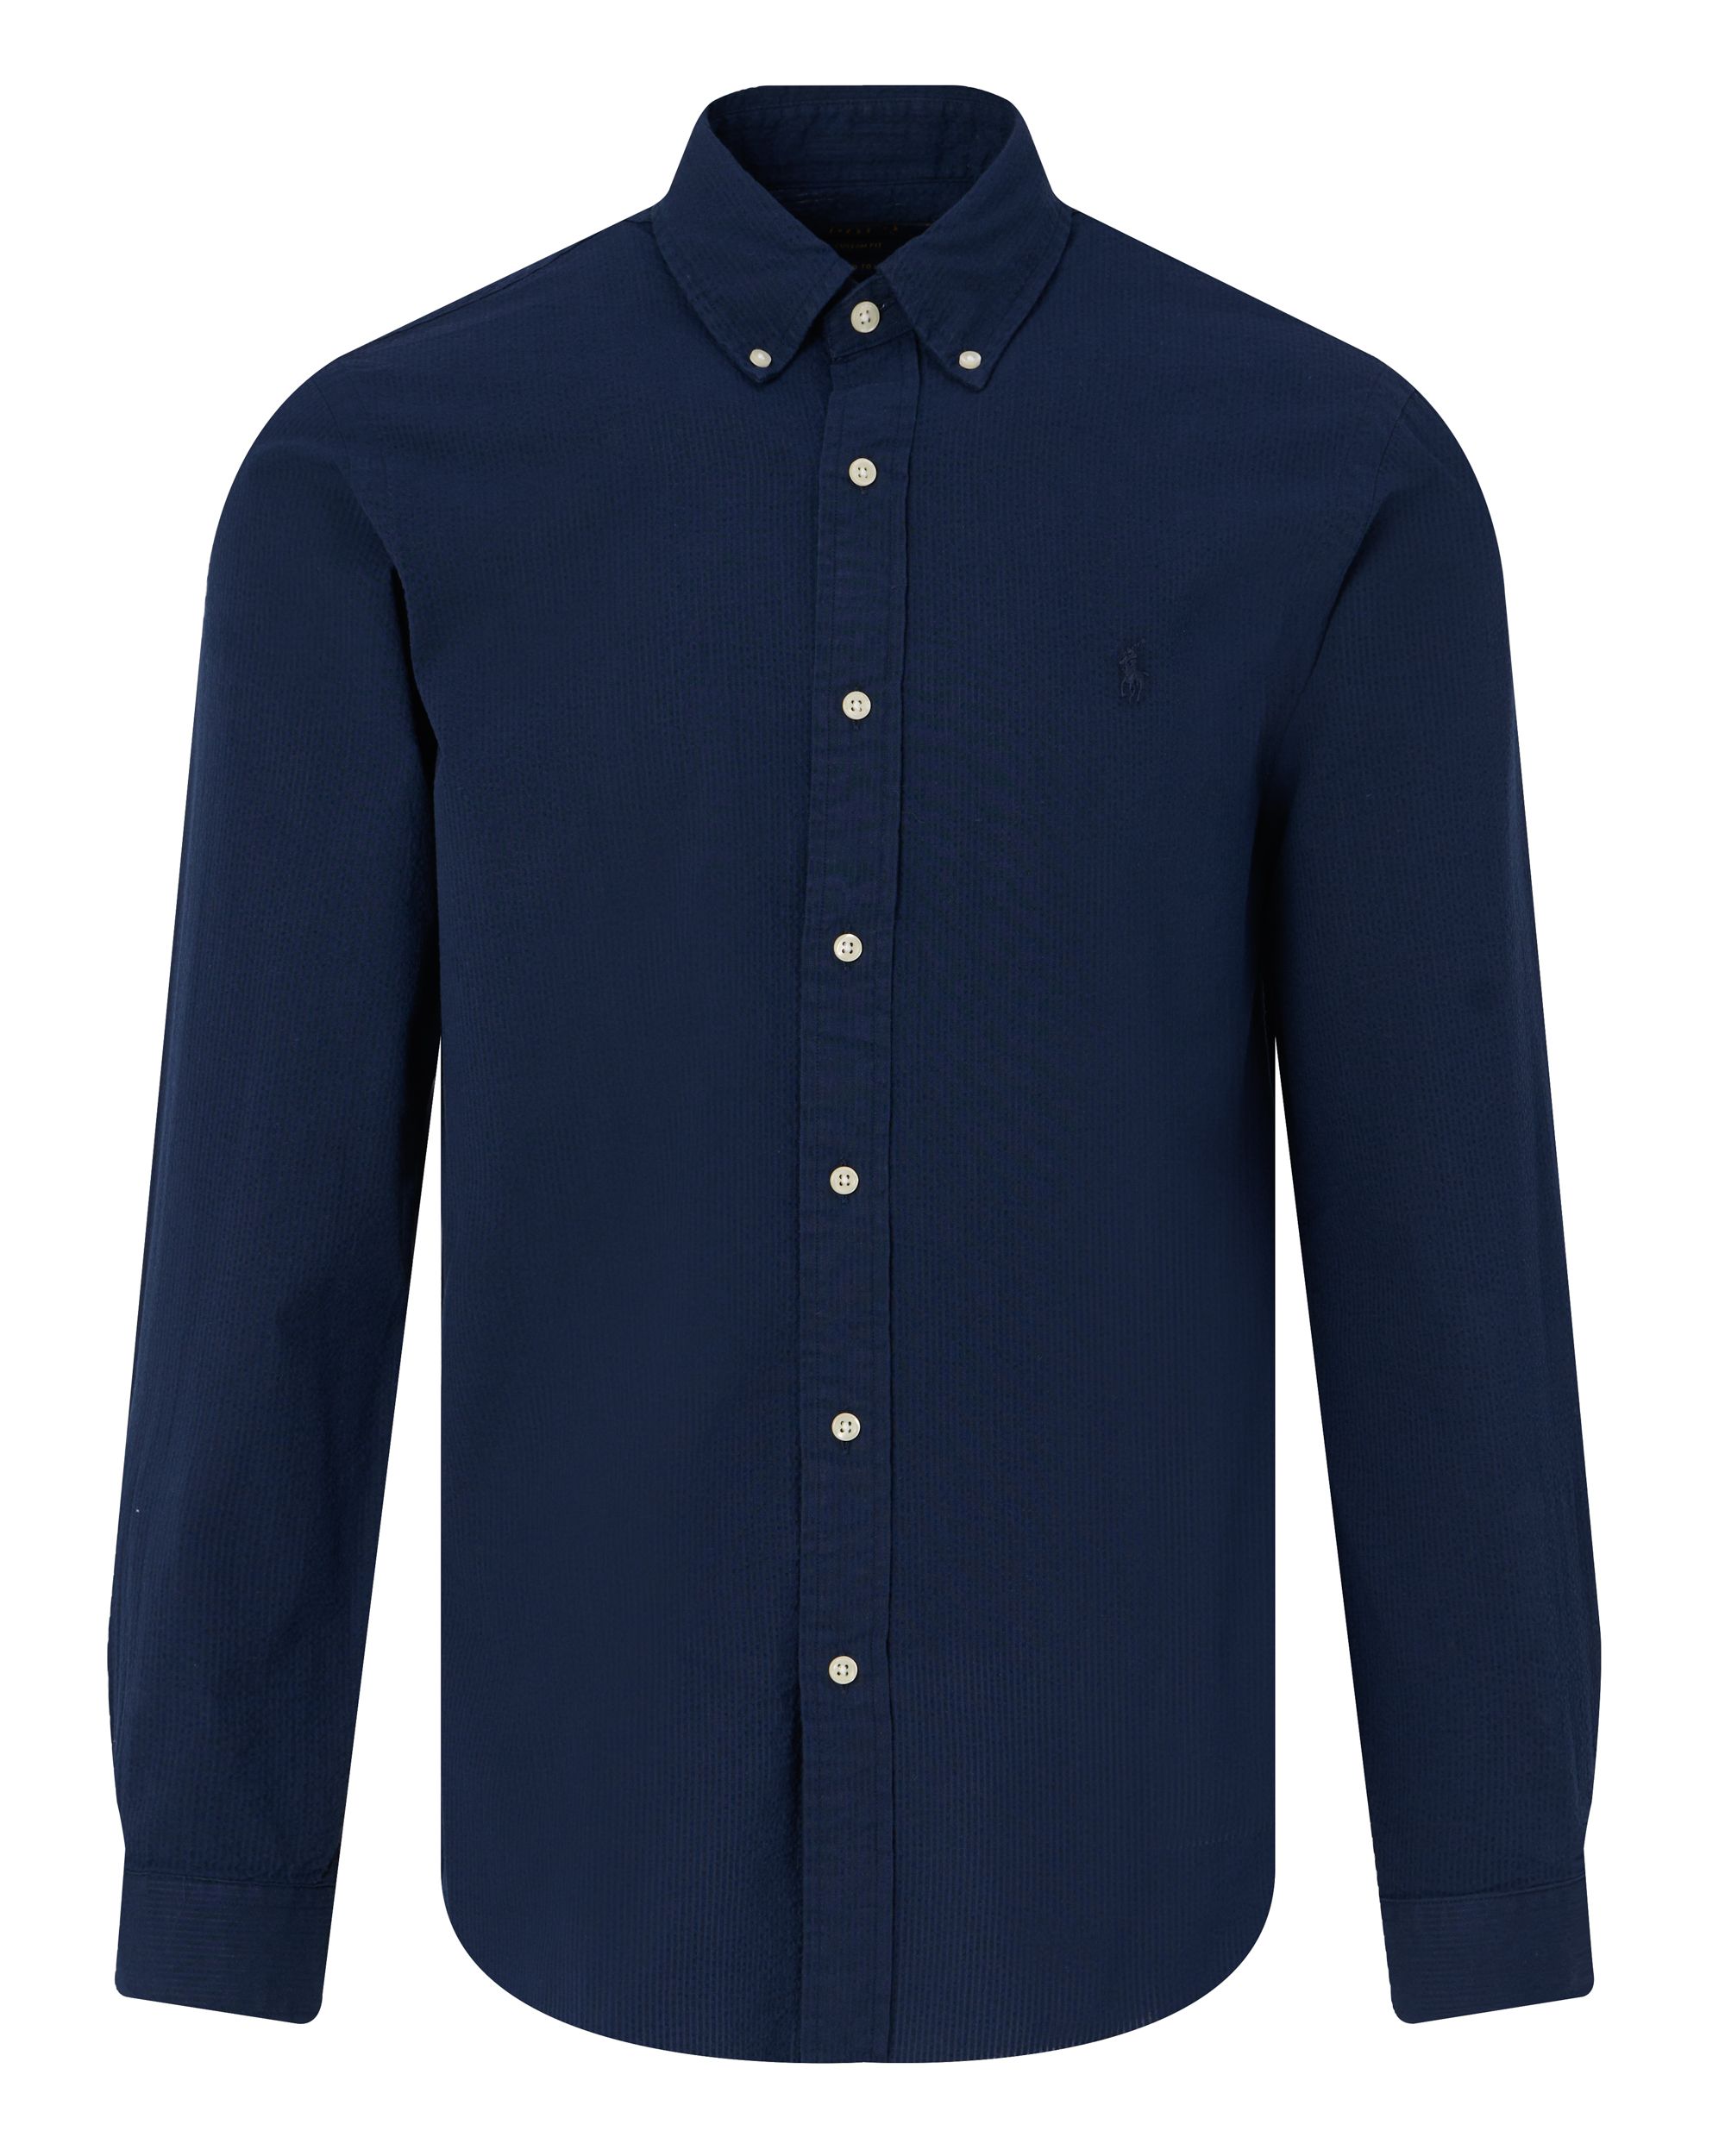 Polo Ralph Lauren Casual Overhemd LM Donker blauw 095276-001-L